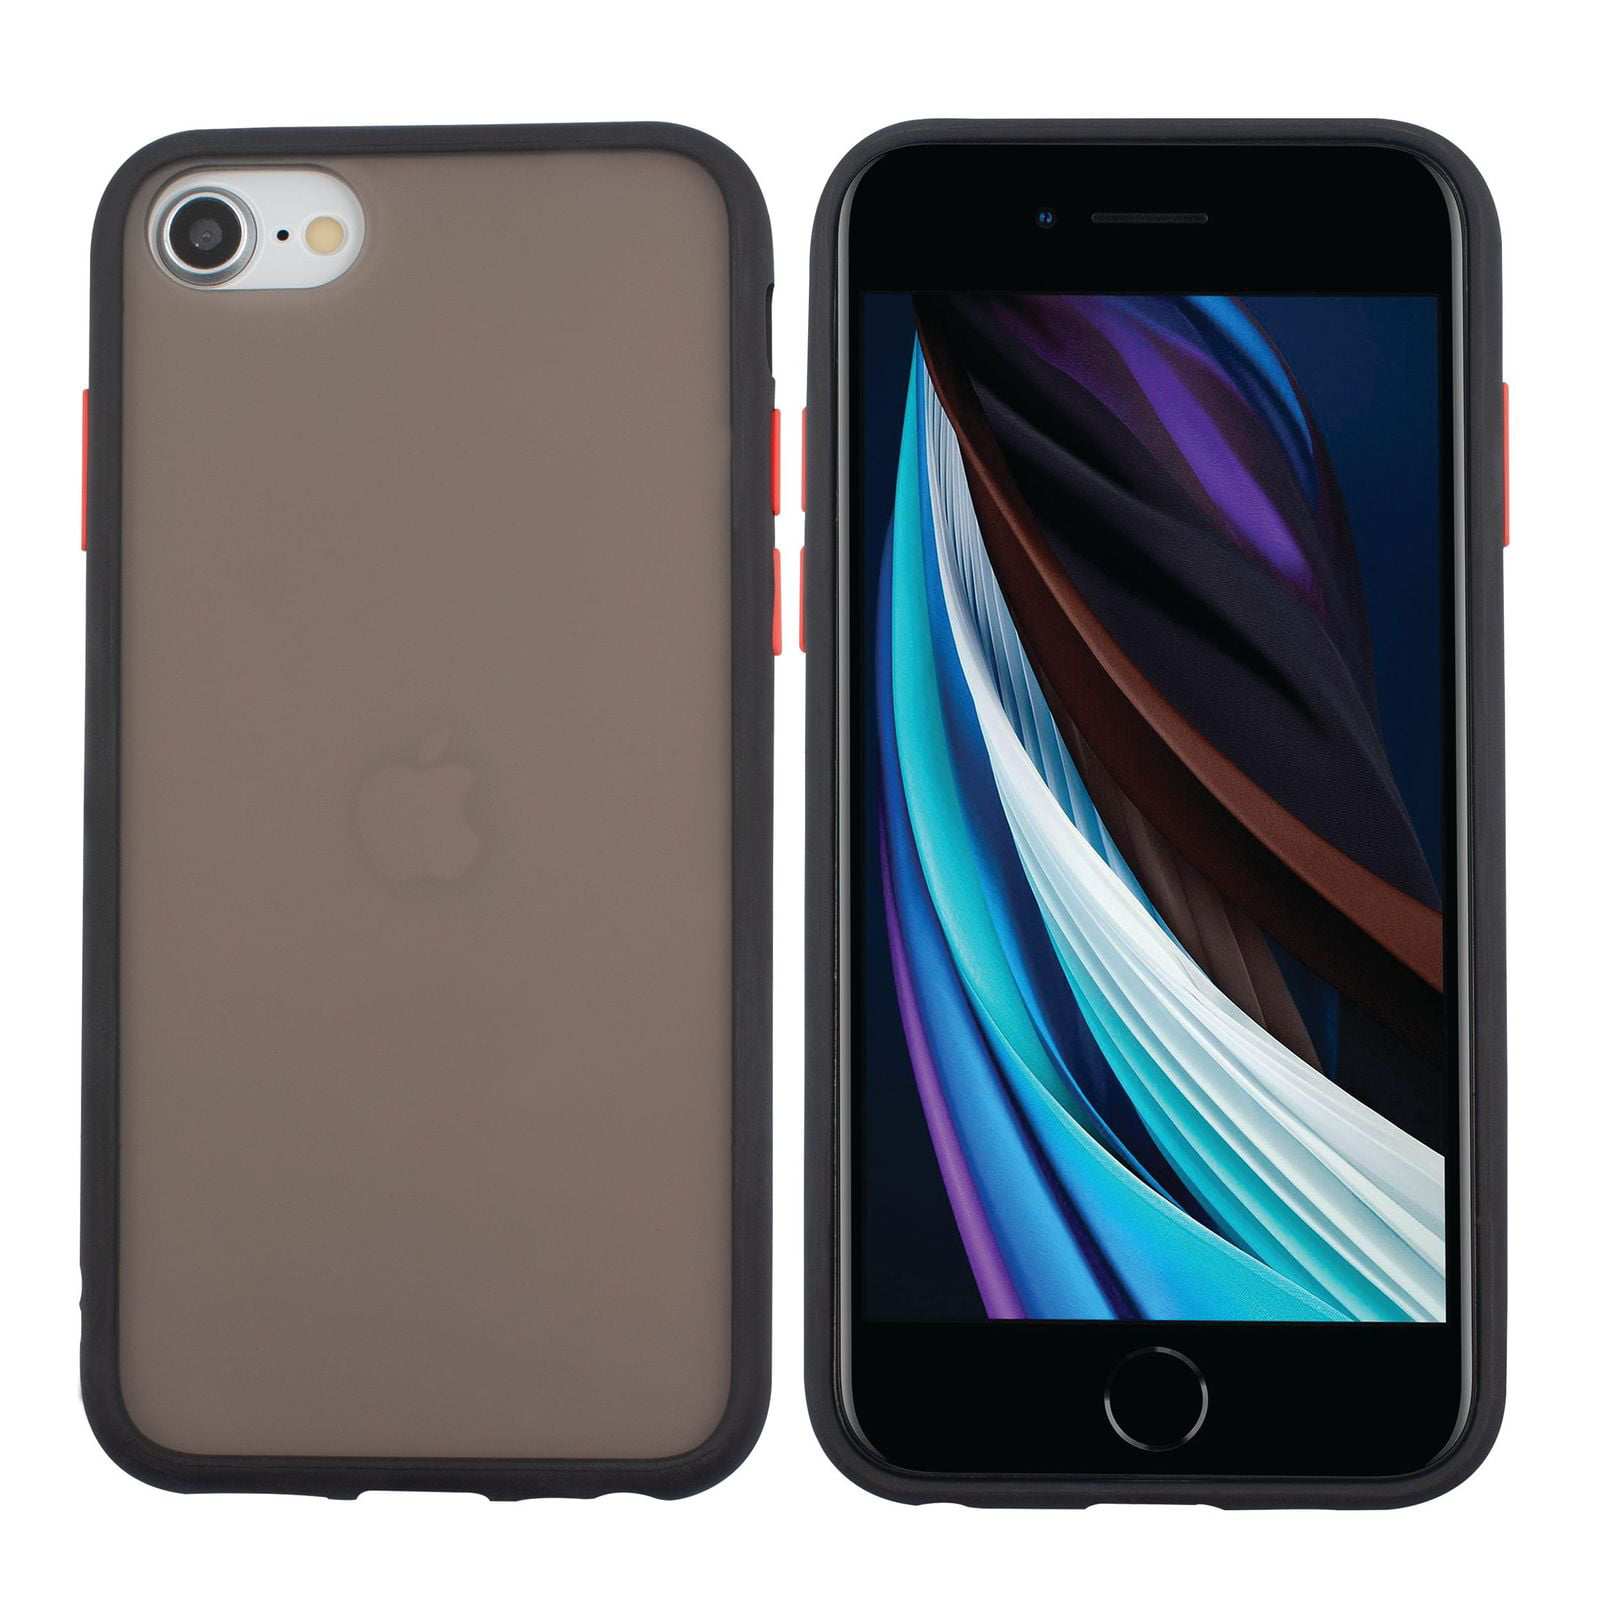 Niet ingewikkeld retort Varken Translucent Matte Case For iPhone SE 2020 (2nd Gen), Hybrid Hard Back Soft  Edges TPU Full Body Cover Black/Red, by Insten - Walmart.com